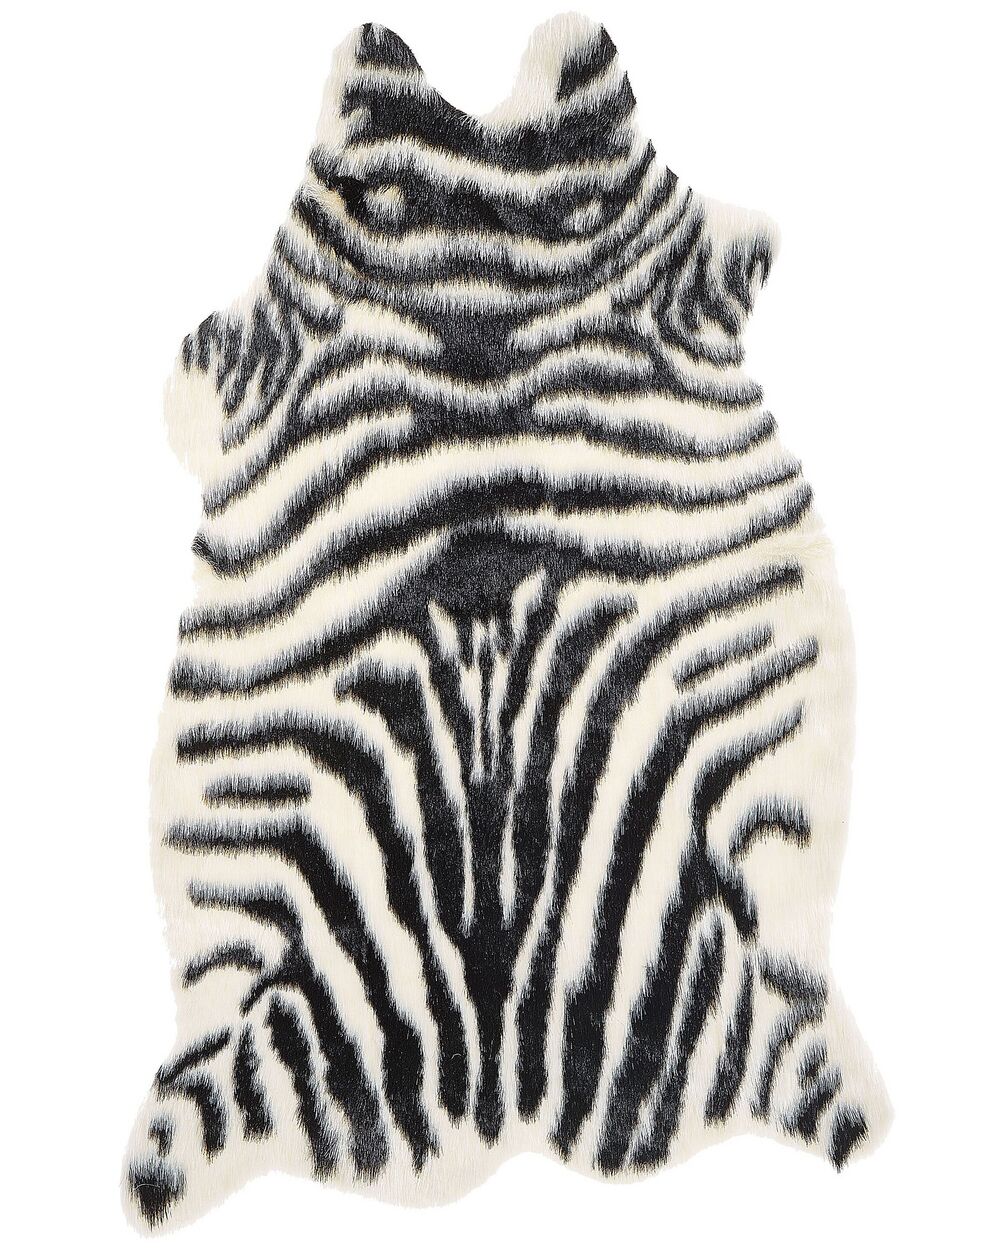 Kunstfell-Teppich Zebra schwarz / weiß 90 cm NAMBUNG 